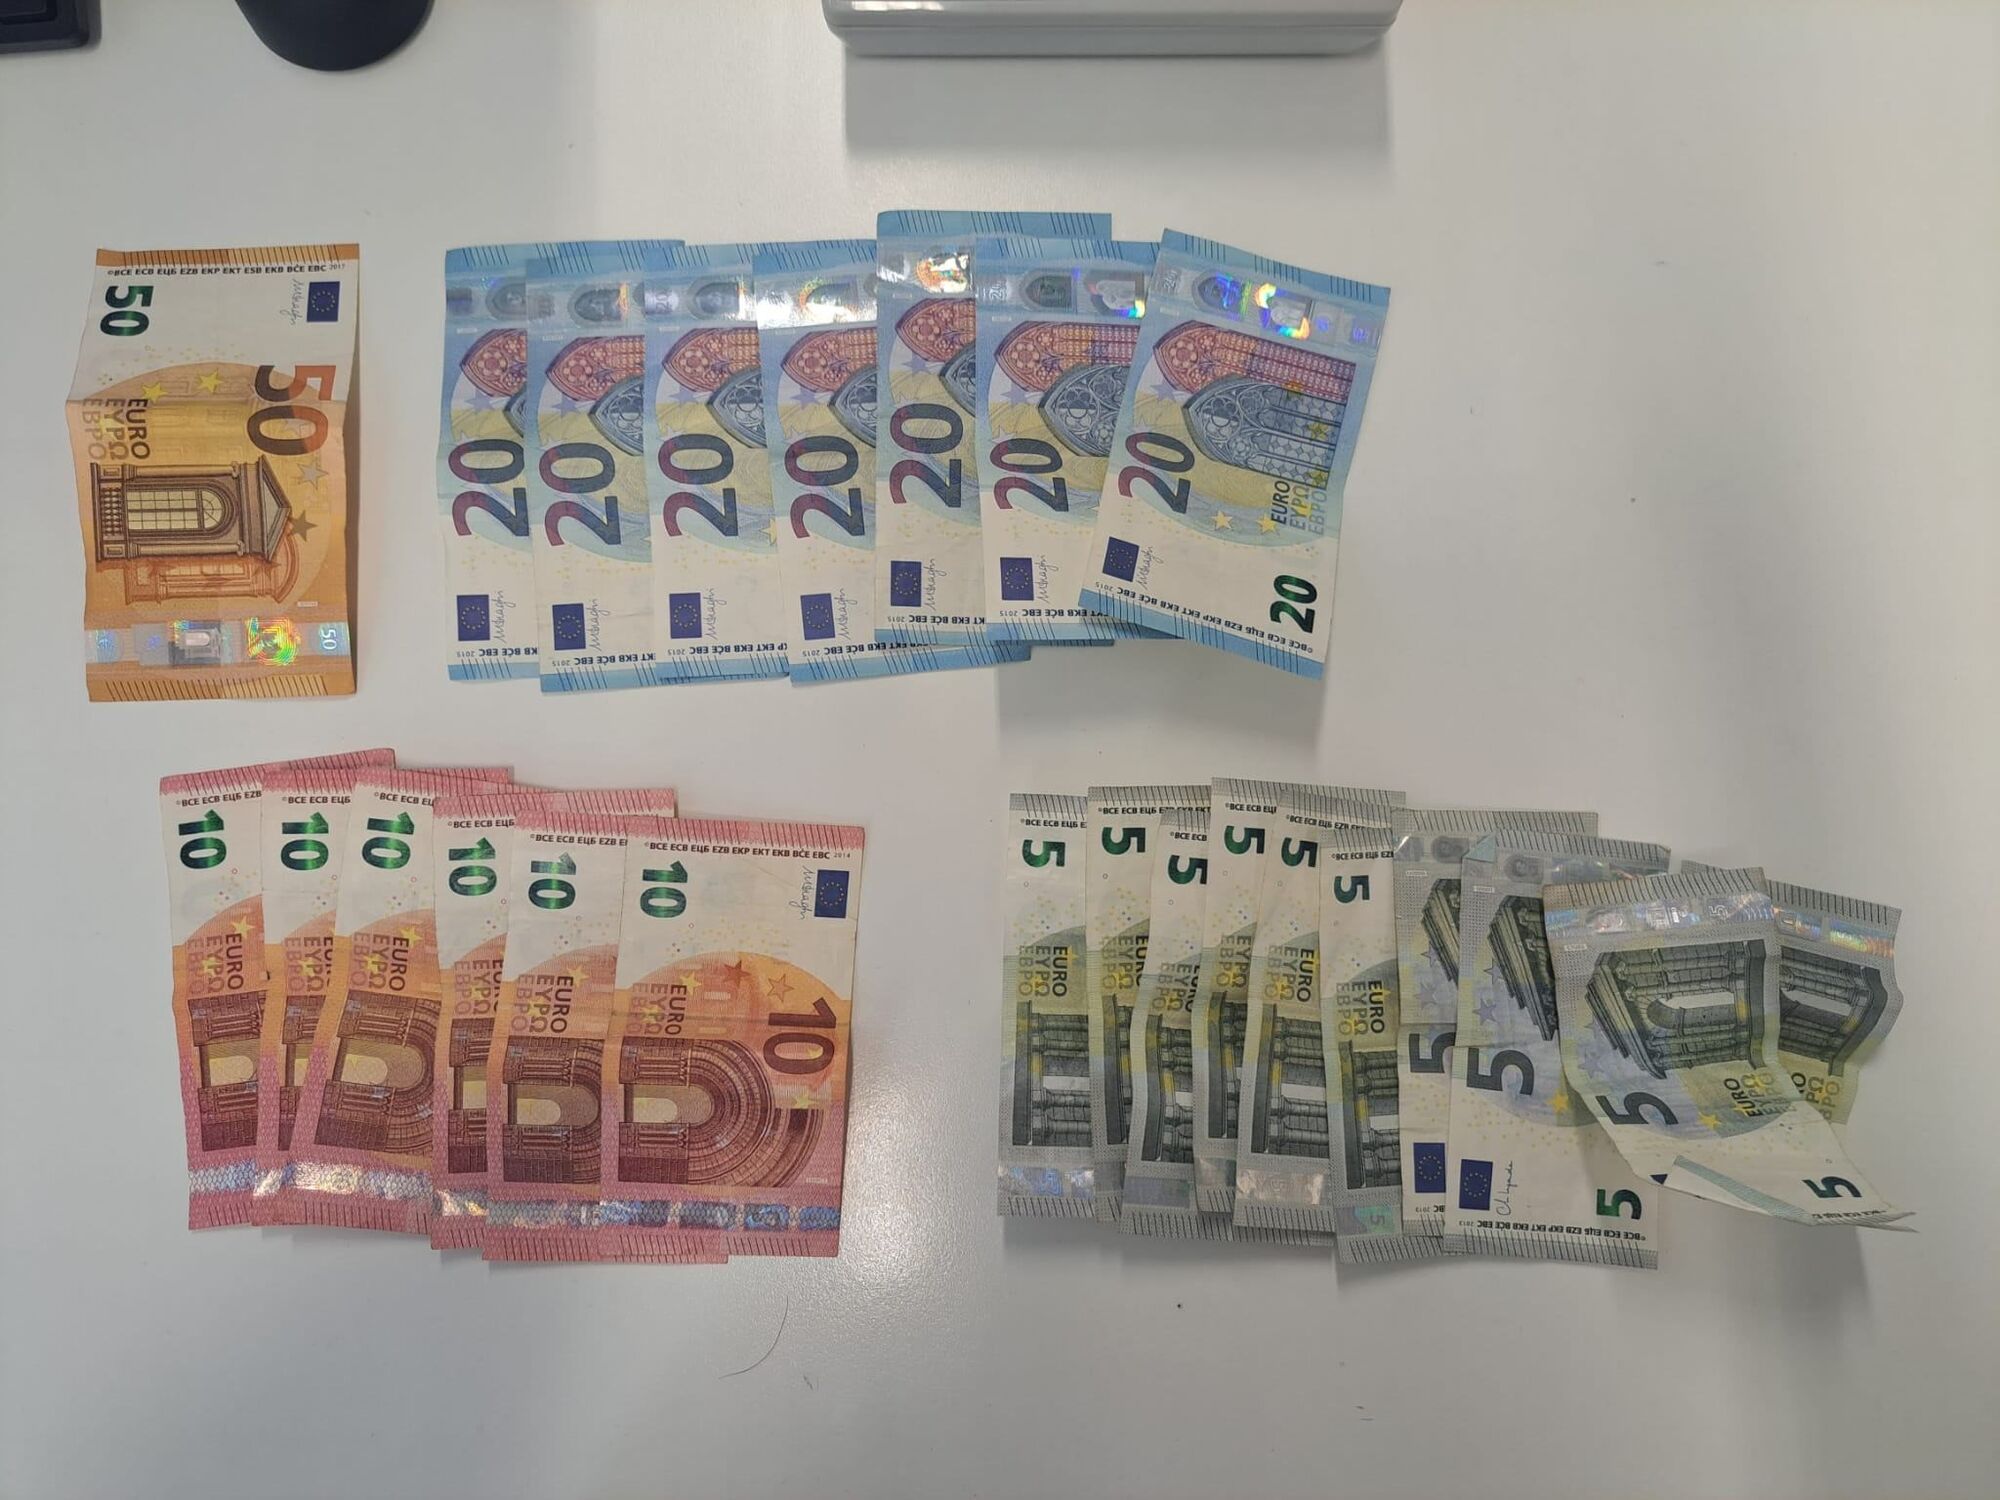 Politie betrapt drie twintigers met 1.000 euro cash en meer dan 60 gram cannabis